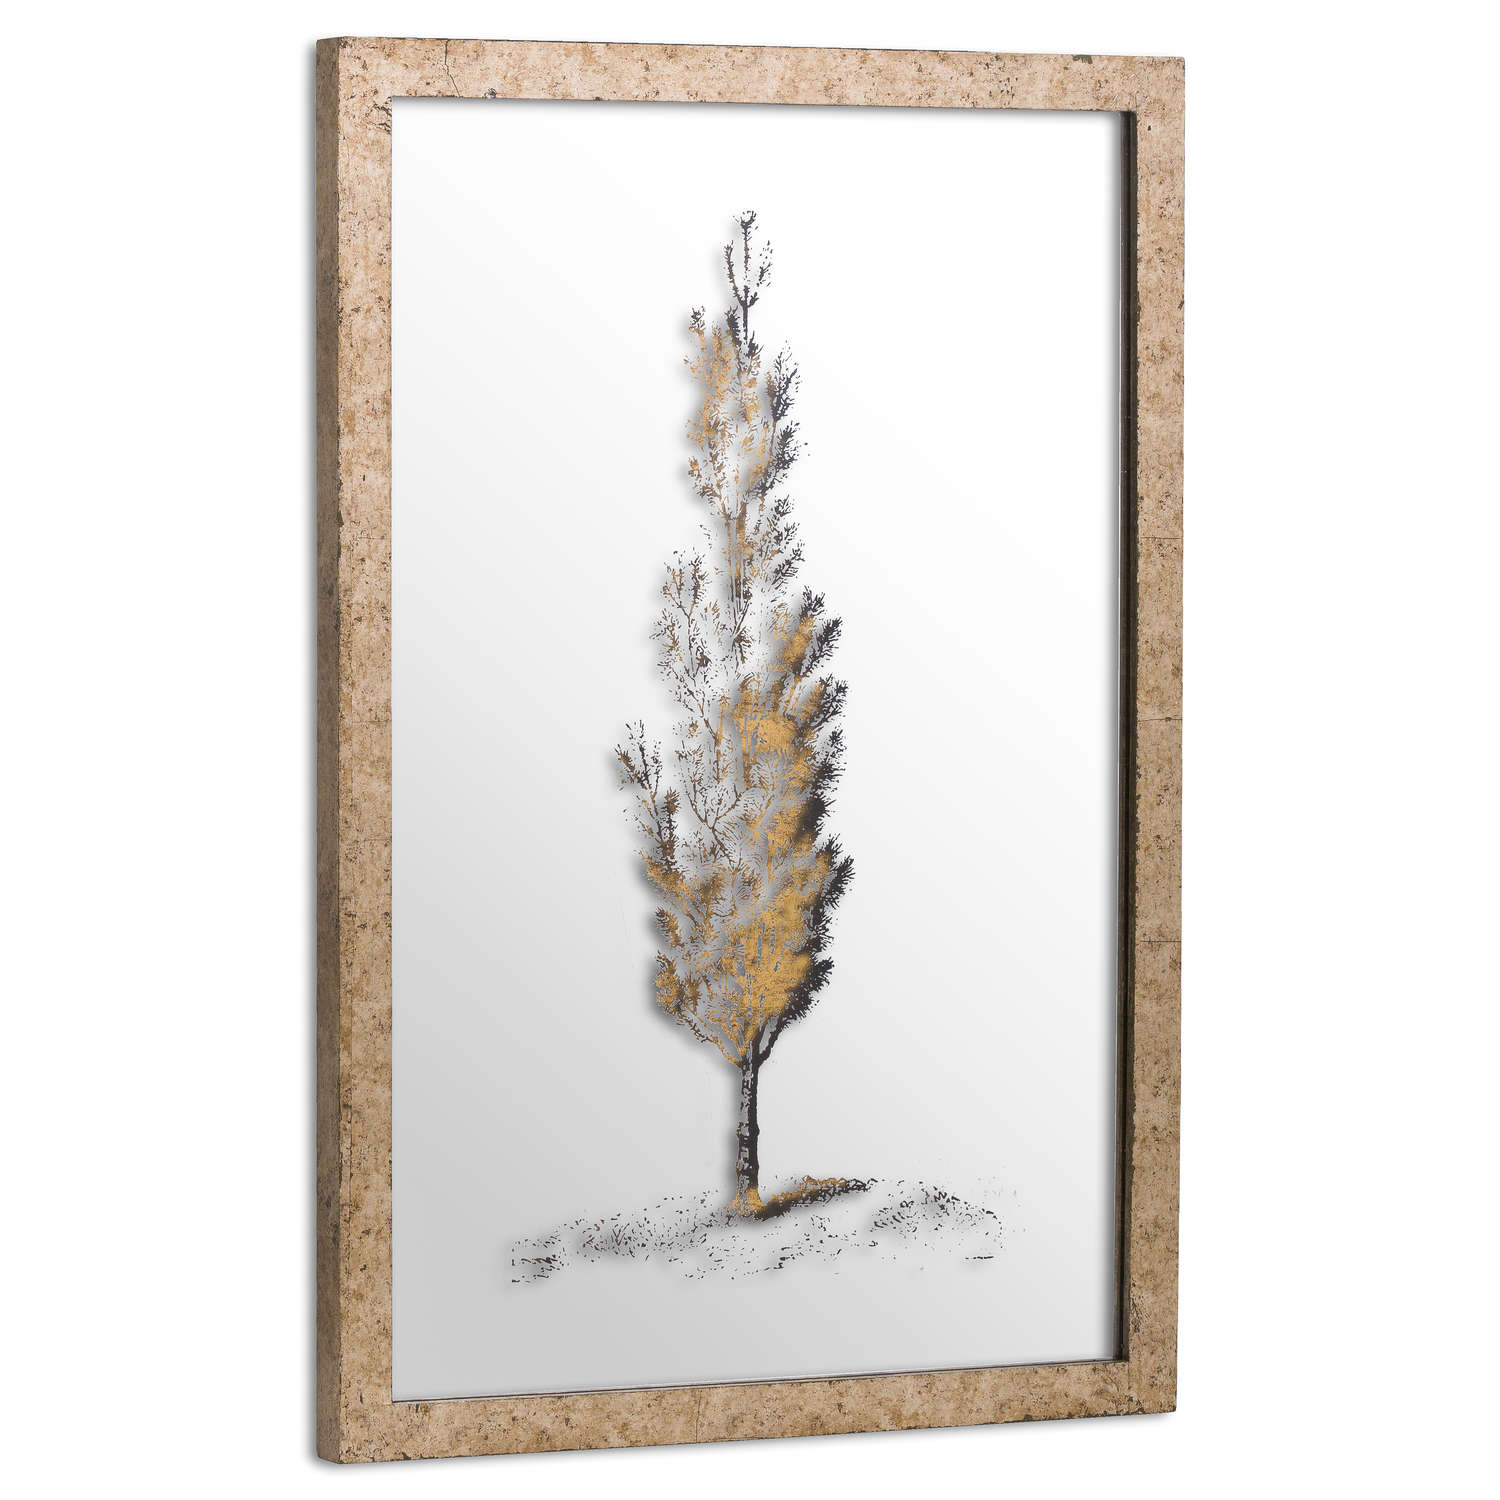 Antique Metallic Brass Mirrored Pine Wall Art - Image 1